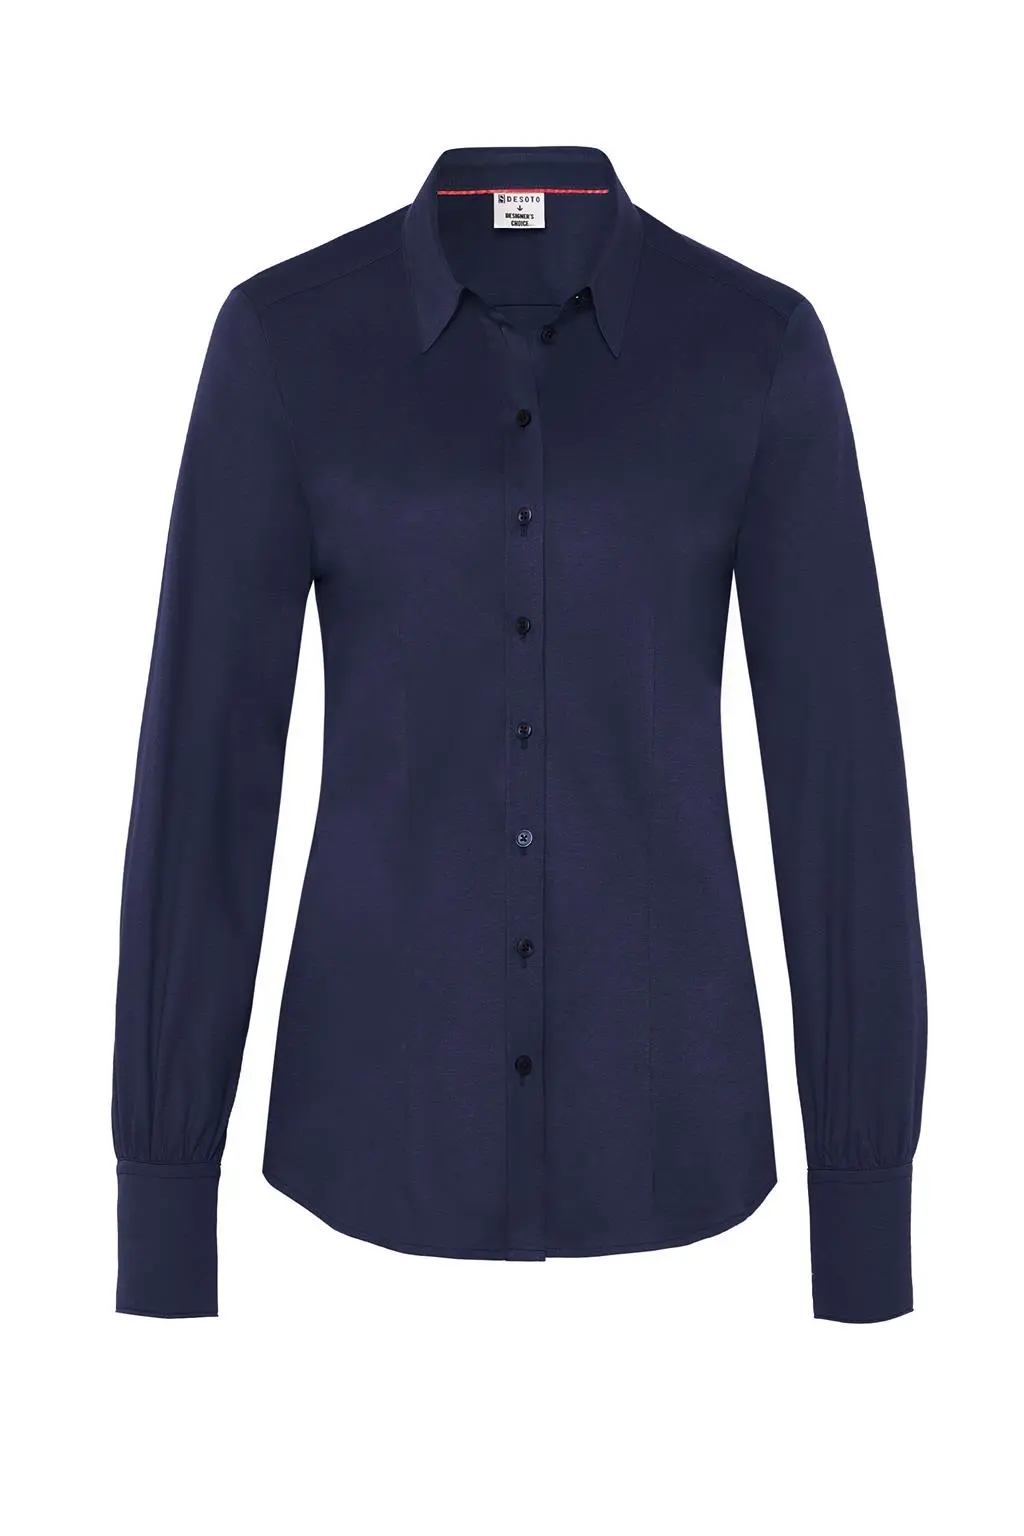 Smit Mode Desoto blouse 90103 2 in het Donker Blauw